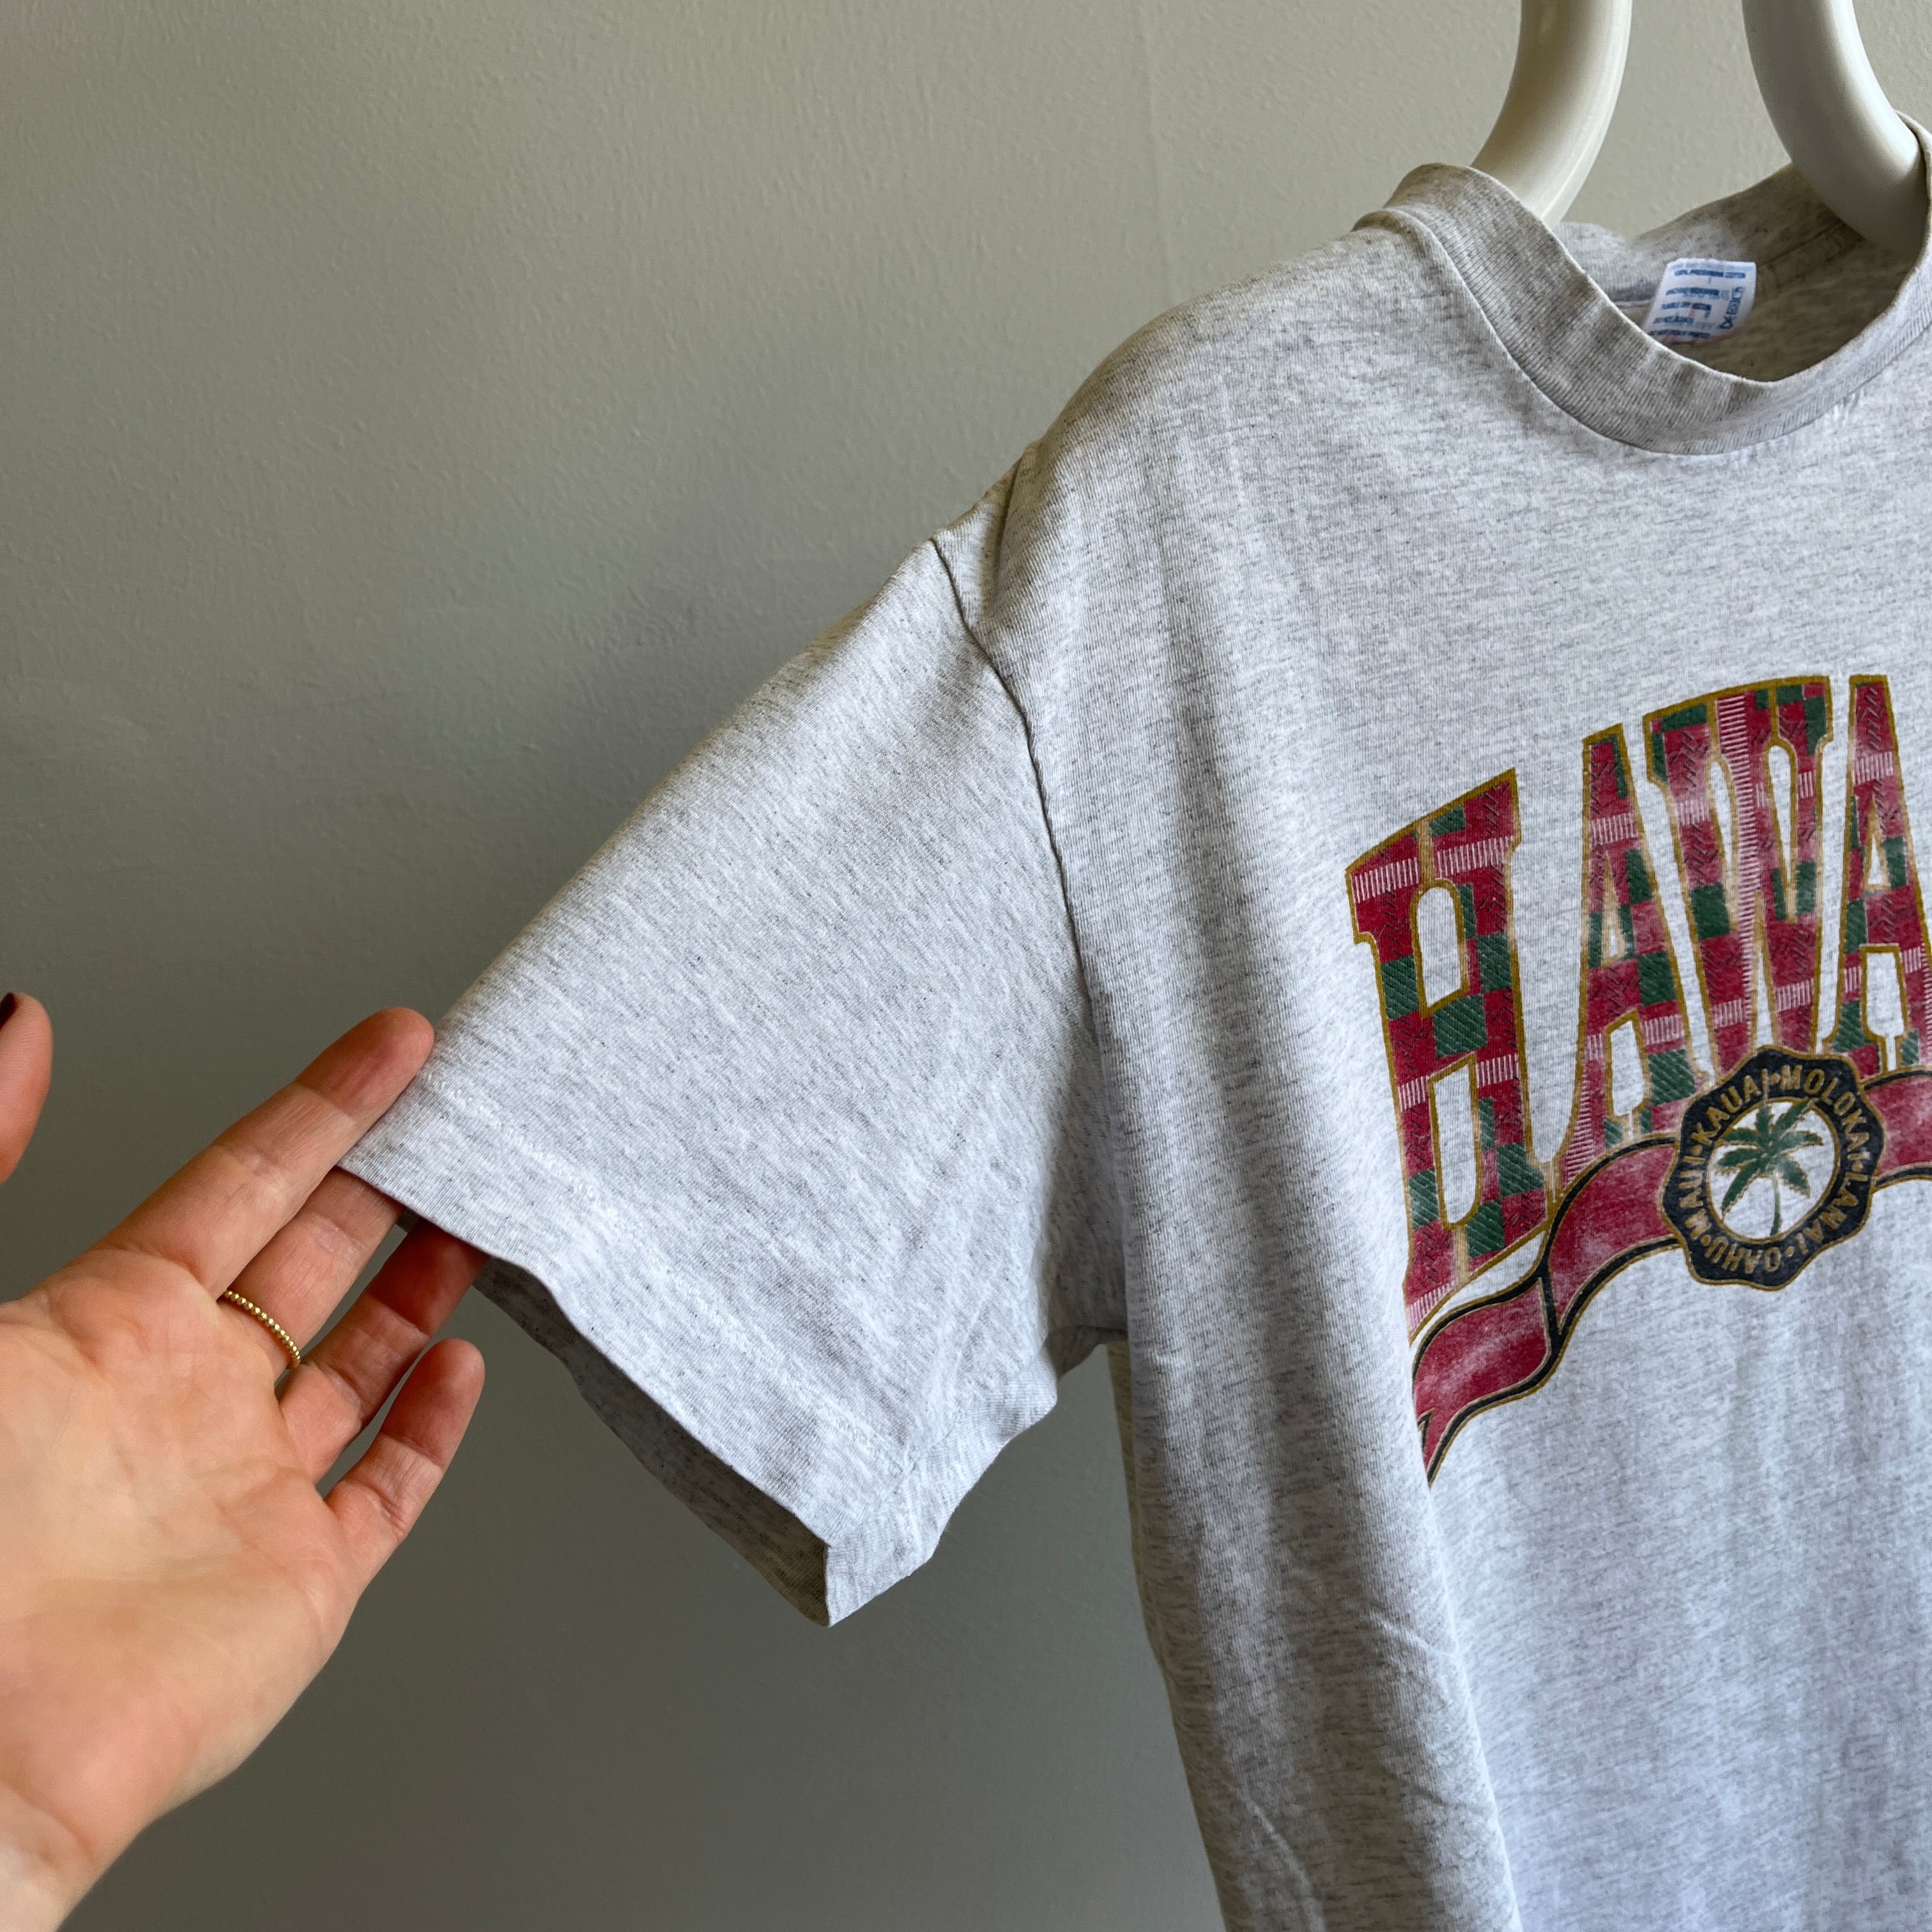 1993 Hawaii Tourist T-Shirt by Tee Jays